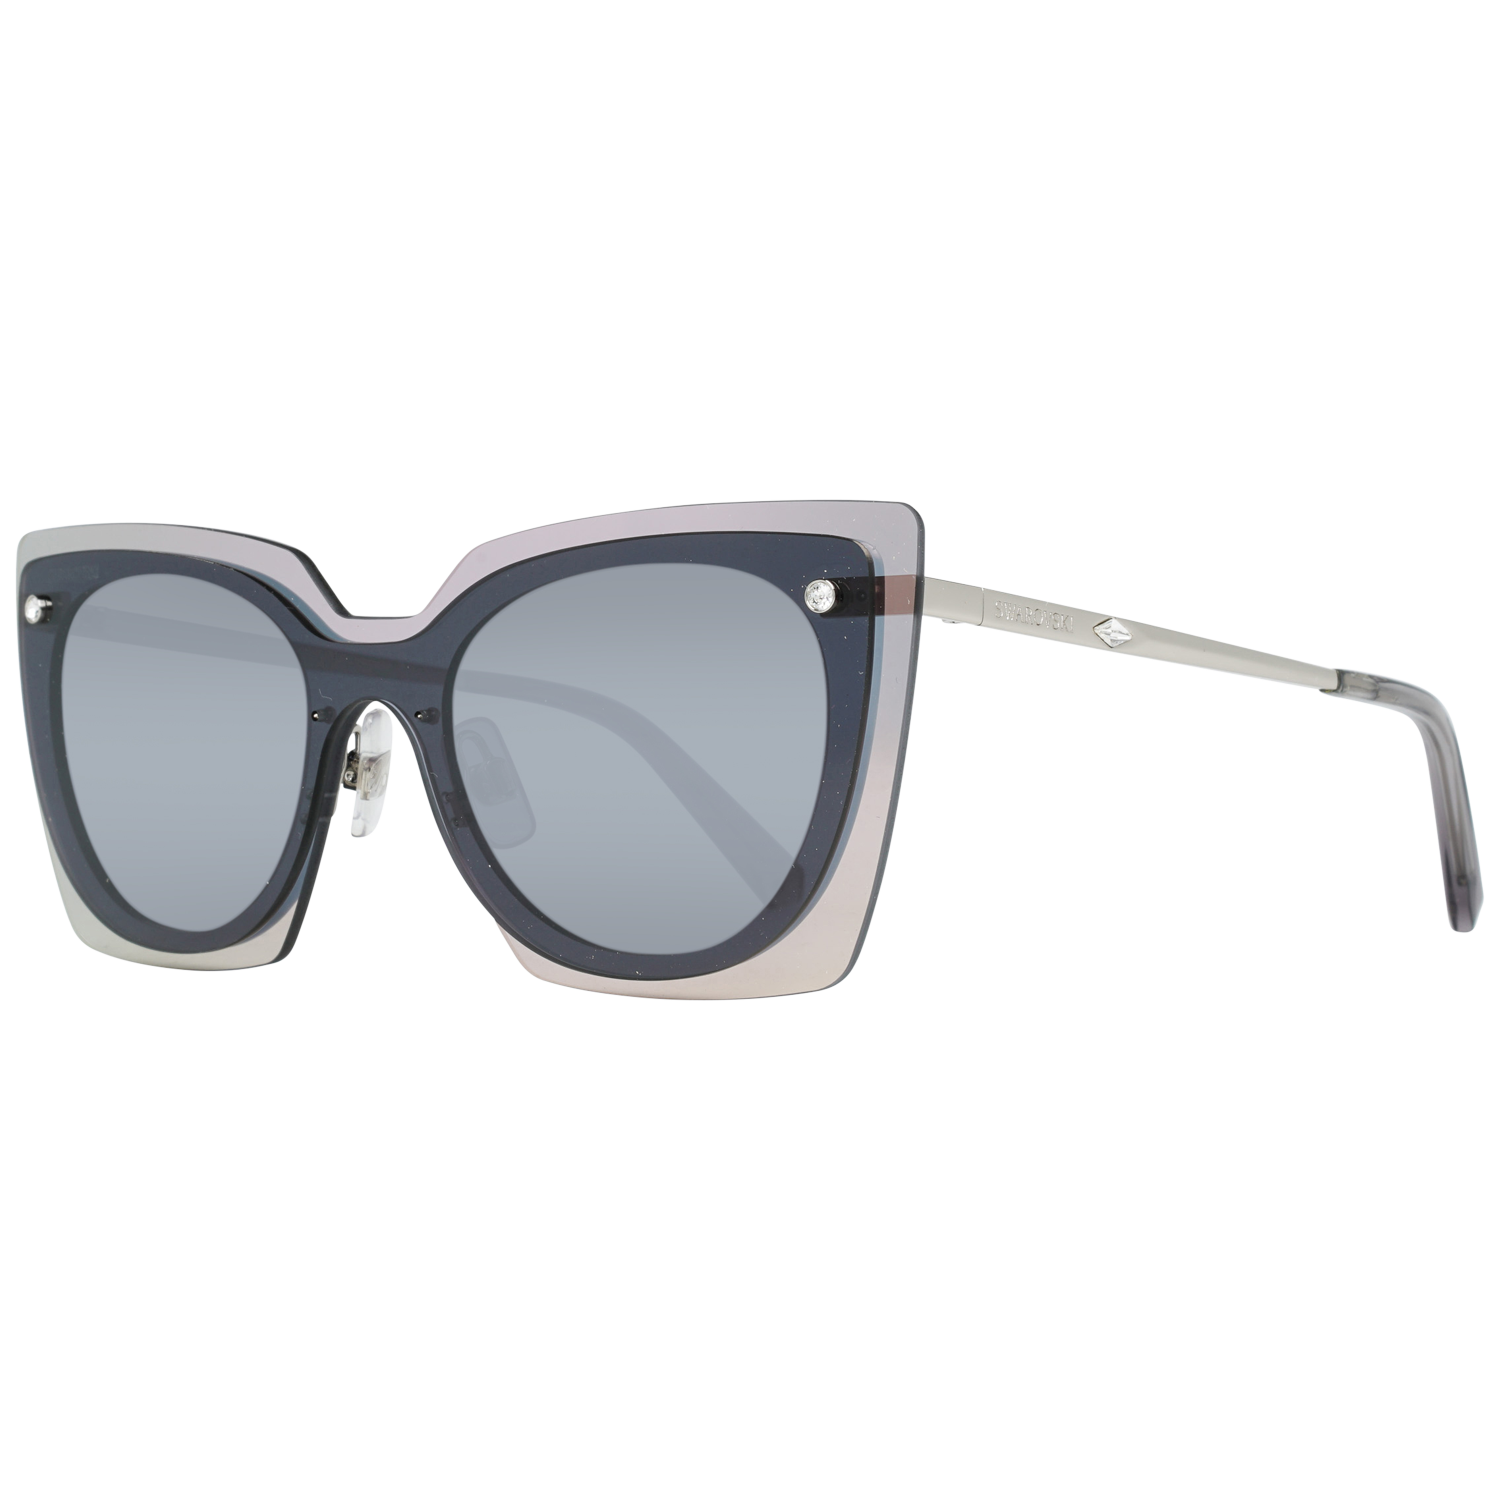 Swarovski Sunglasses Swarovski Sunglasses SK0201 16A 00 Eyeglasses Eyewear UK USA Australia 